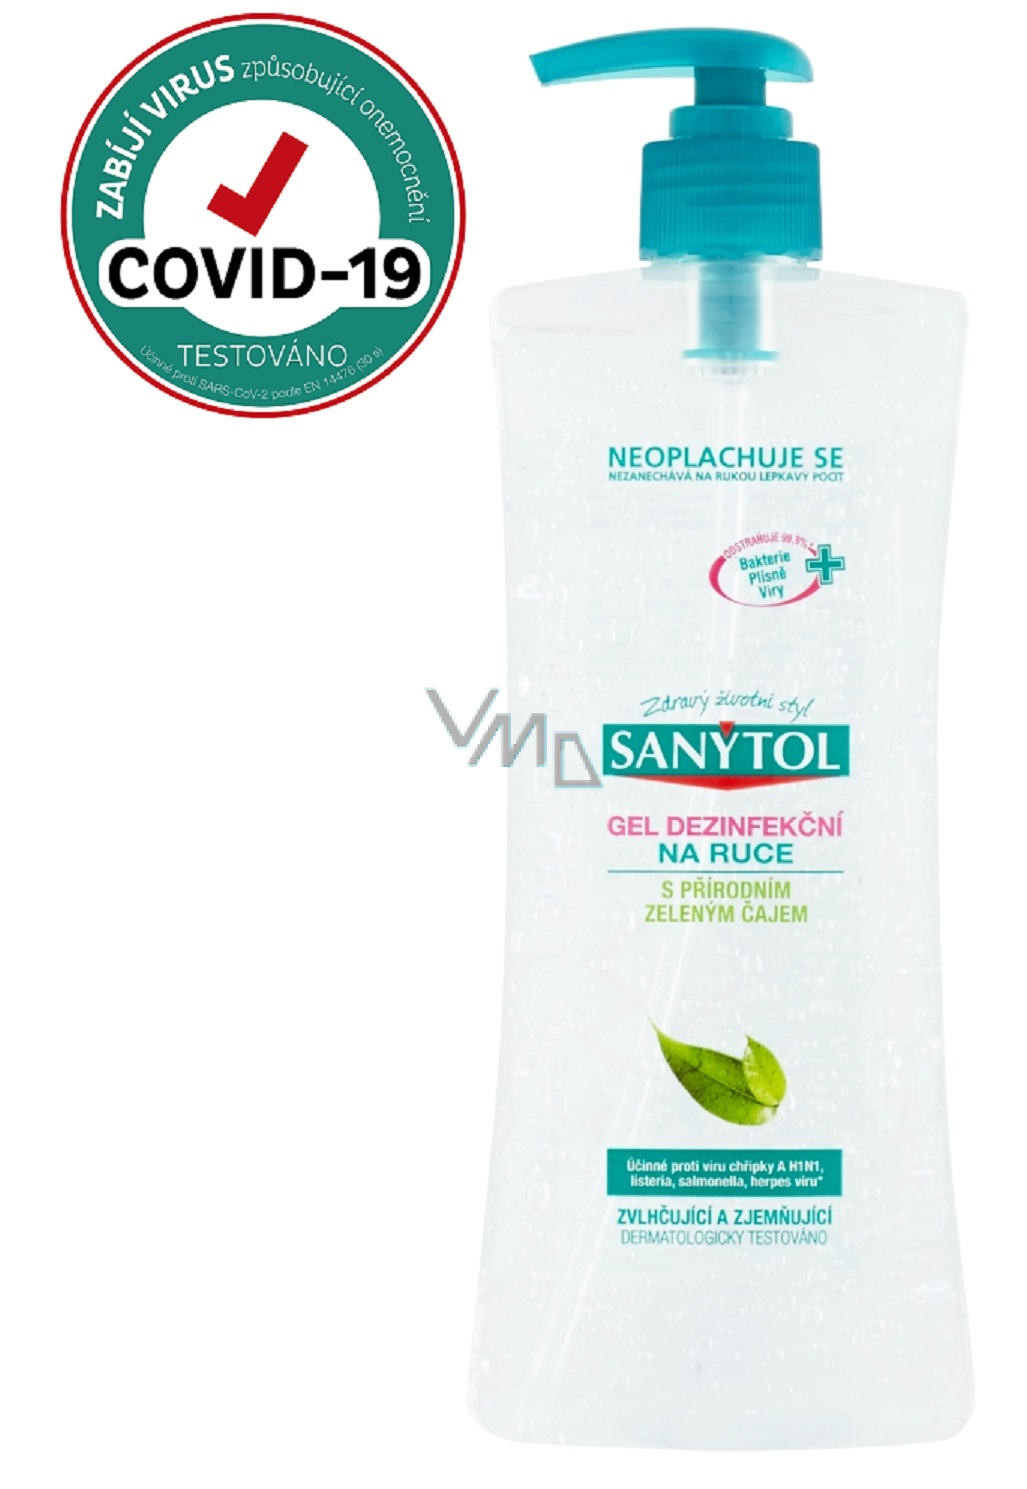 Sanytol Eucalyptus disinfectant universal cleaner spray 500 ml - VMD  parfumerie - drogerie